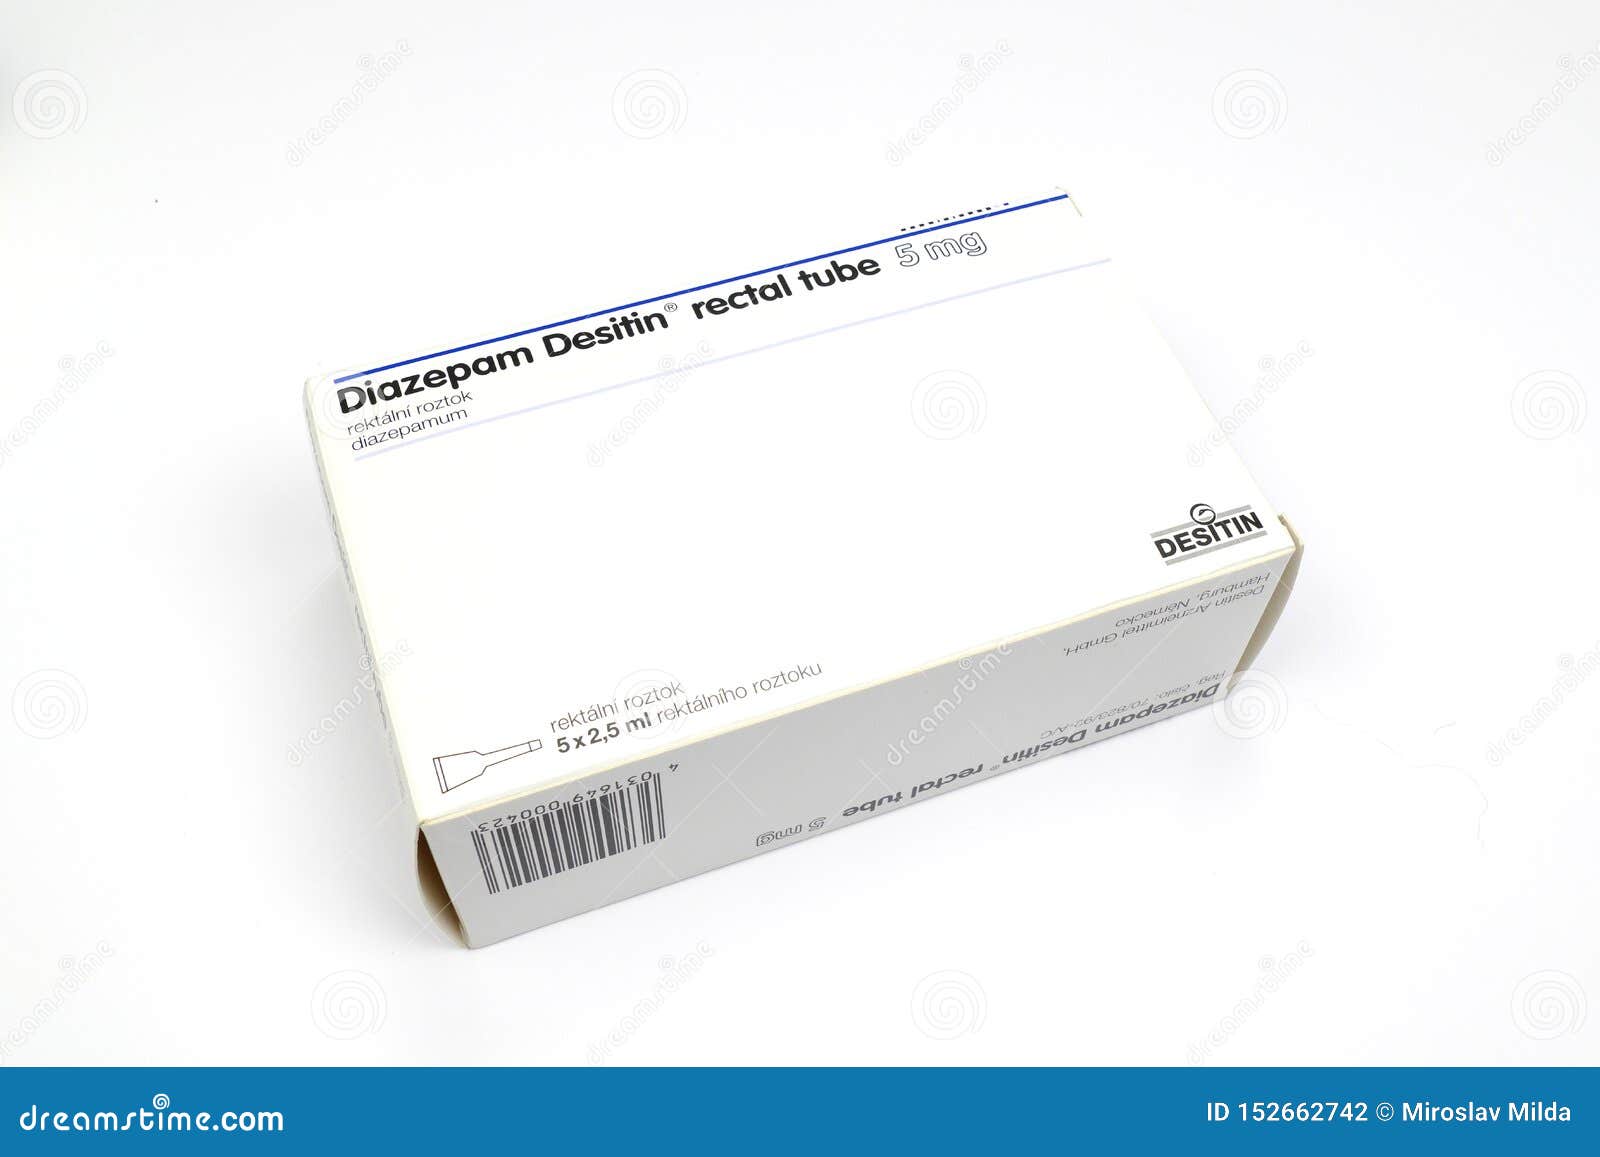 Diazepam Desitin 5mg